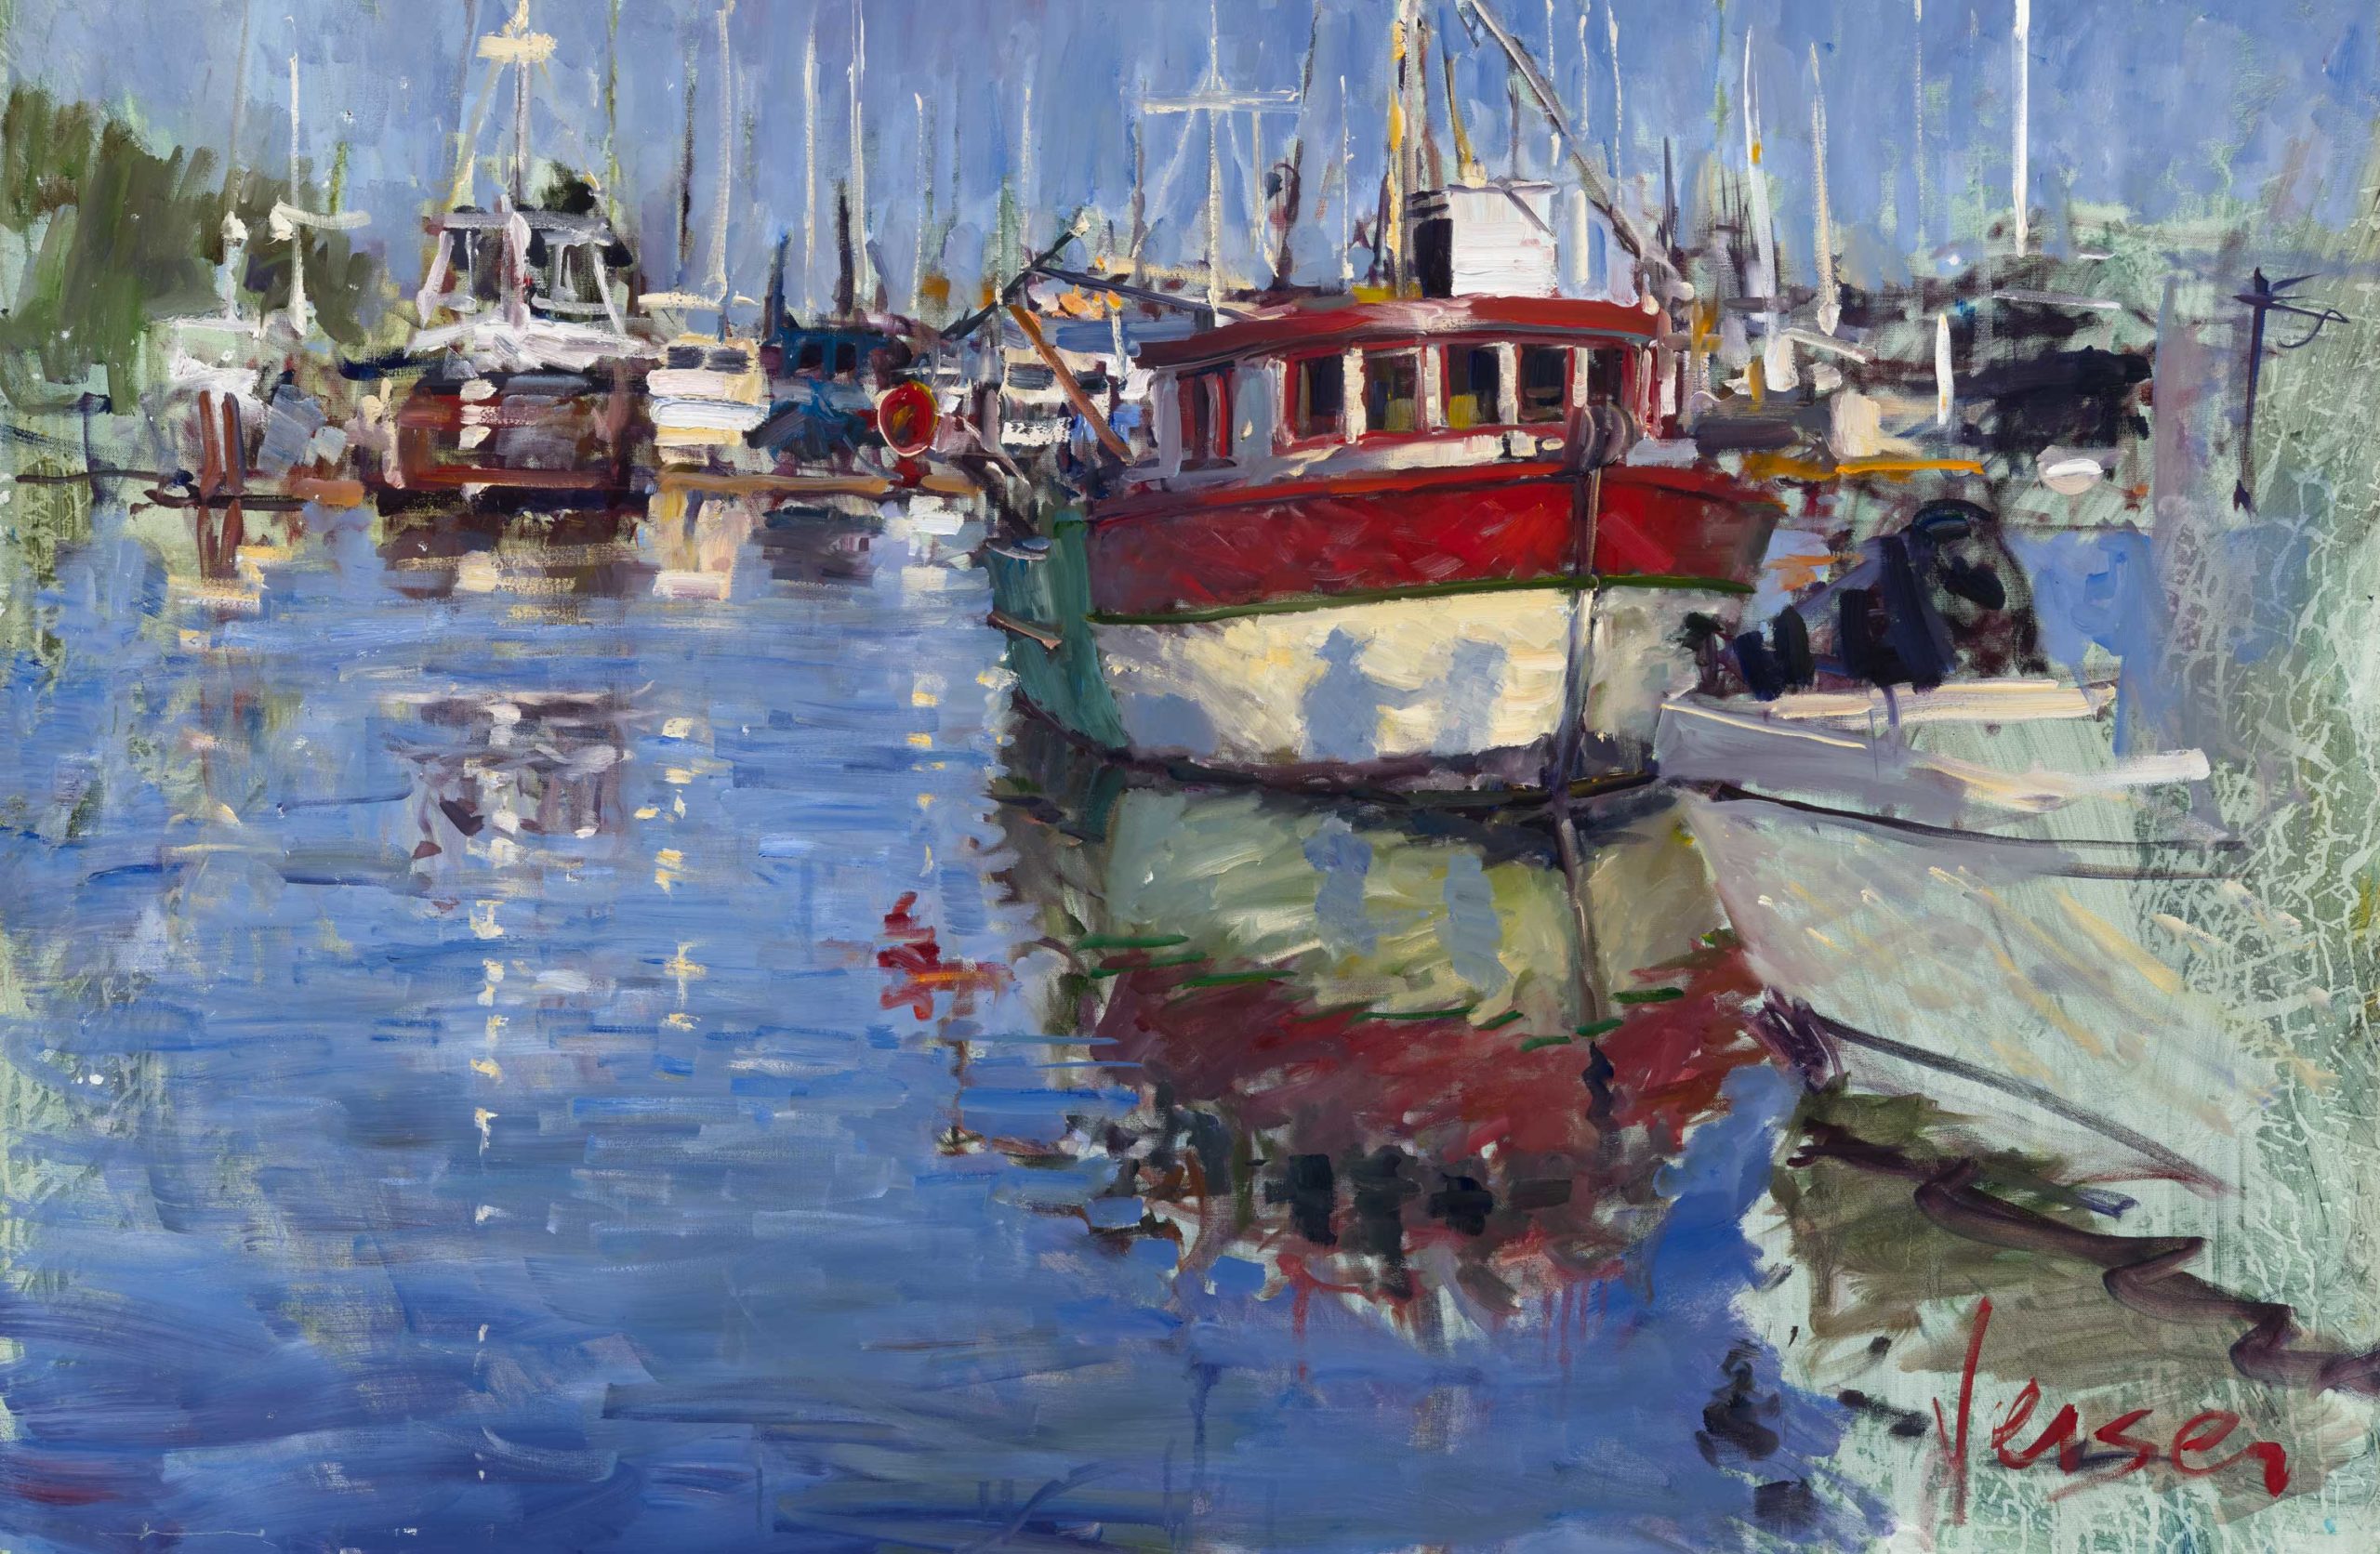 Ryan Jensen, "Red Boat," 2018, oil, 40 x 60 in., Collection the artist, Plein air